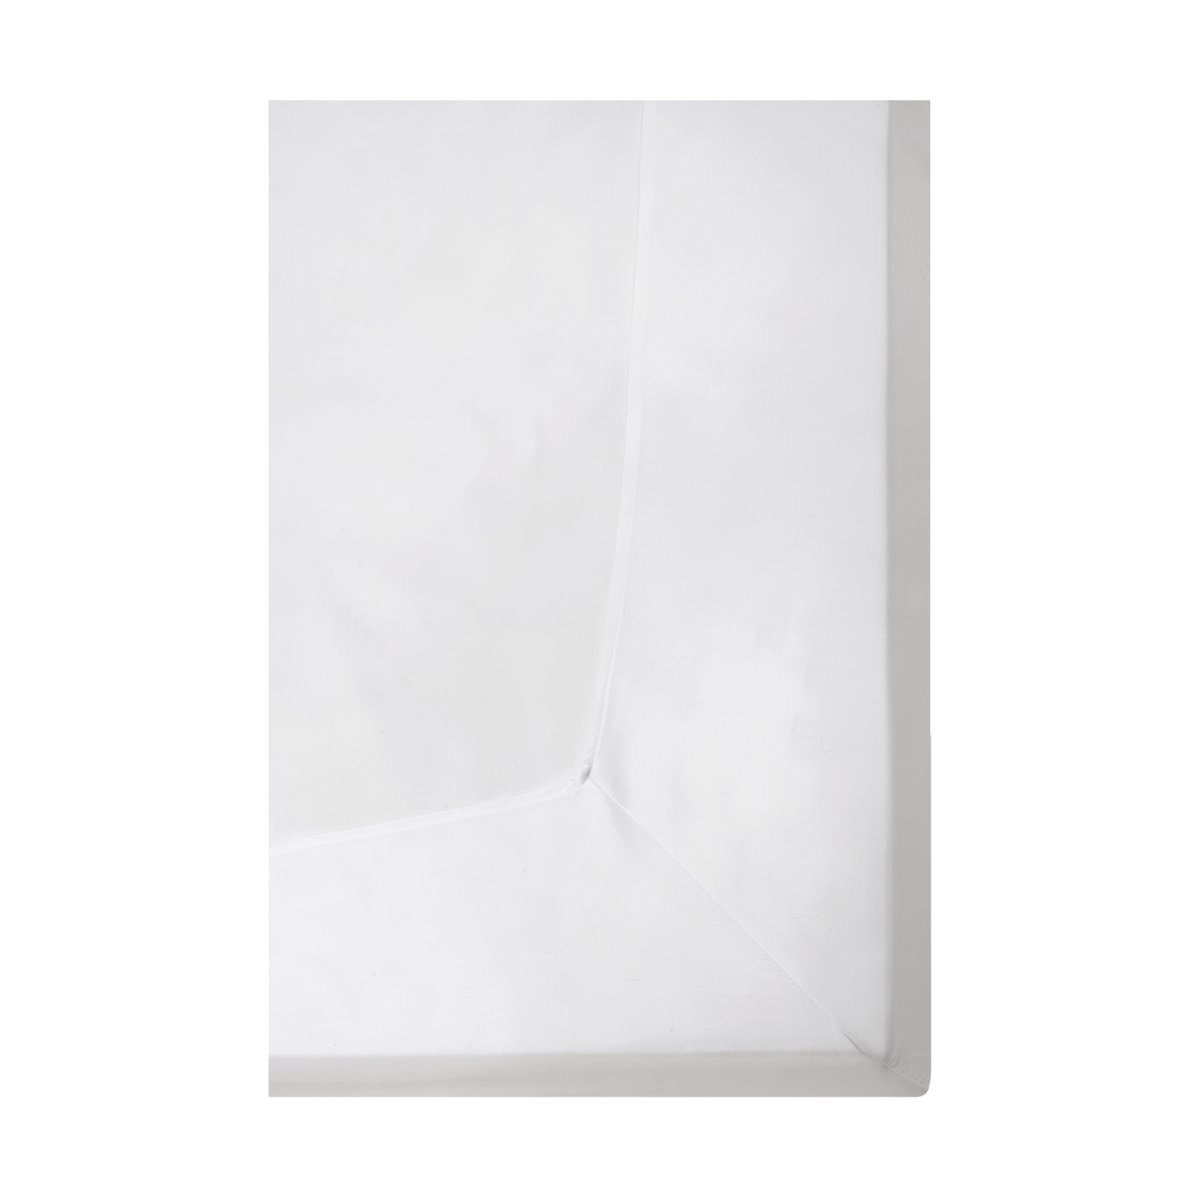 Himla Soul omslag genaaid hoeslaken 140x200 cm White